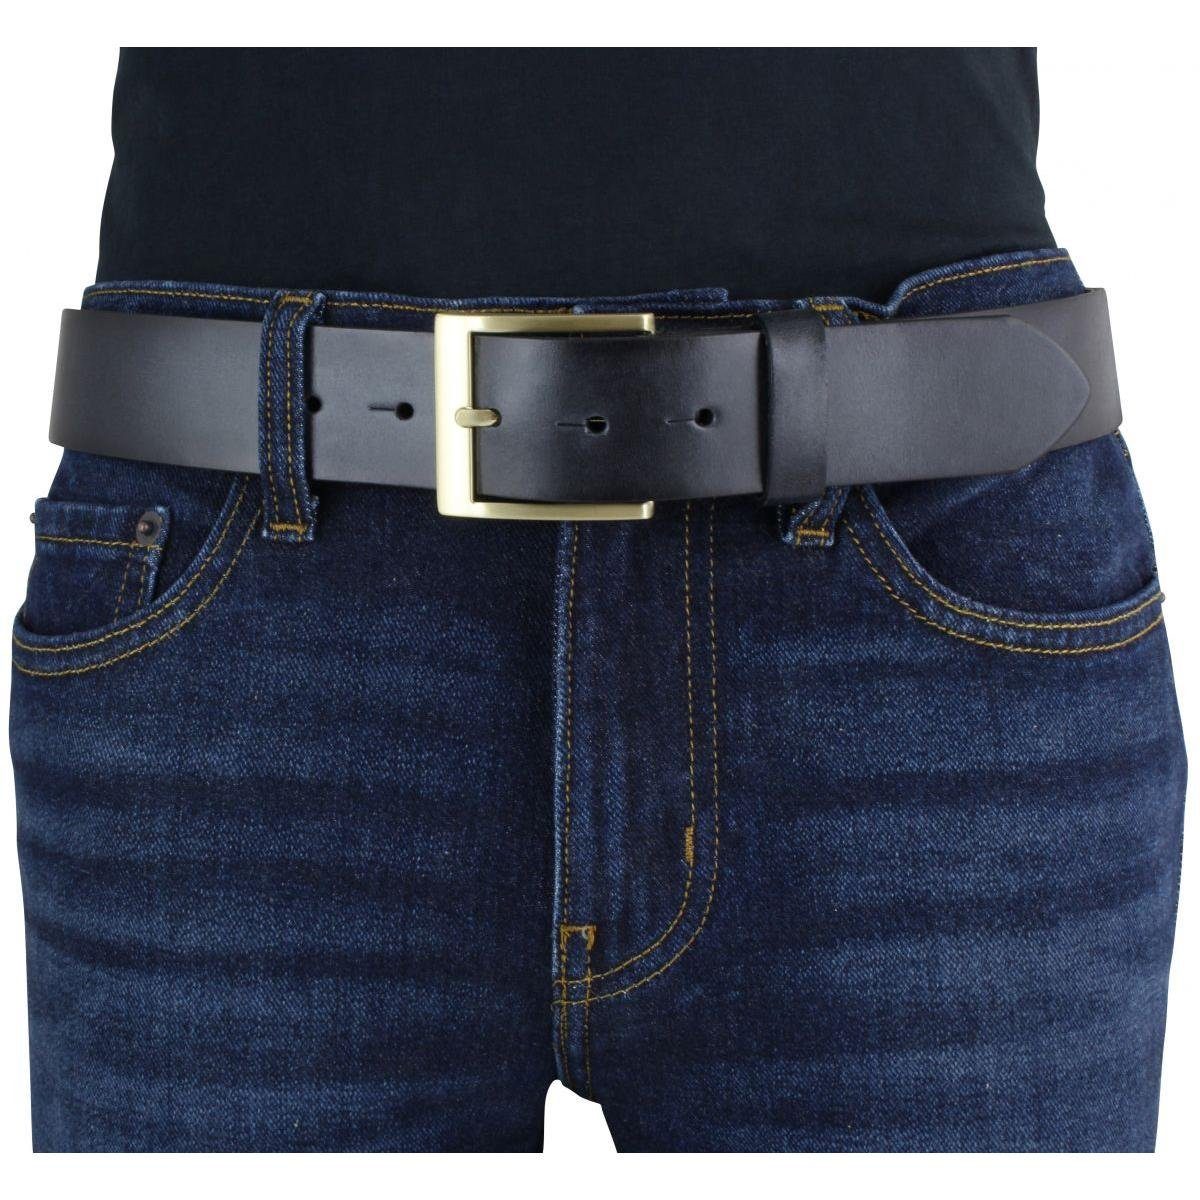 Jeans-Gürtel Ledergürtel mit Vintage-Look Vollrindleder Herren-Gürtel BELTINGER 4 aus g Braun, - cm Gold